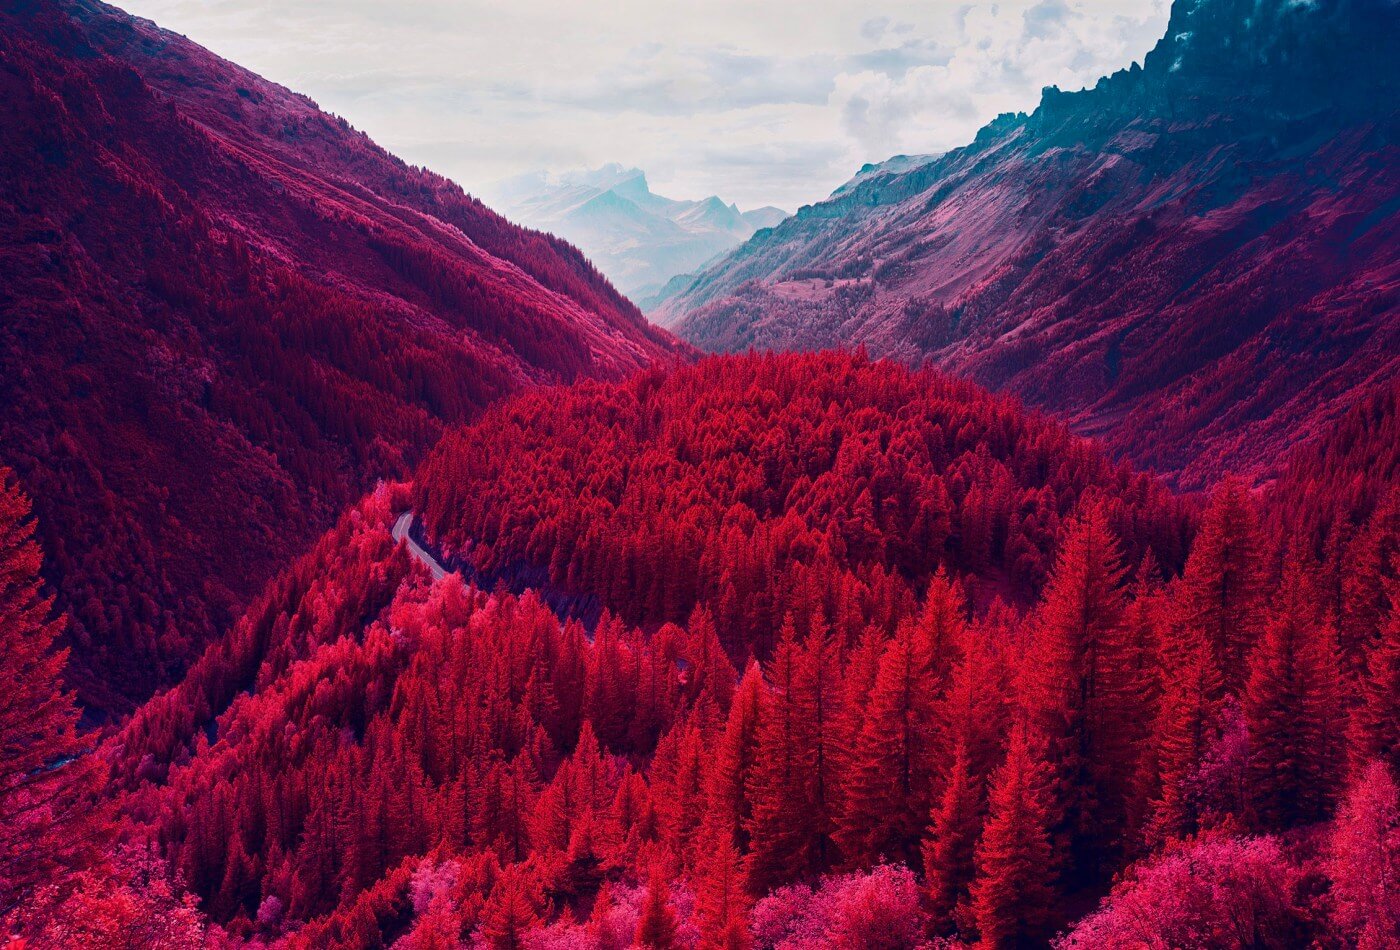 Swiss Alps - Infrared Moss and Fog by Zak van Biljon